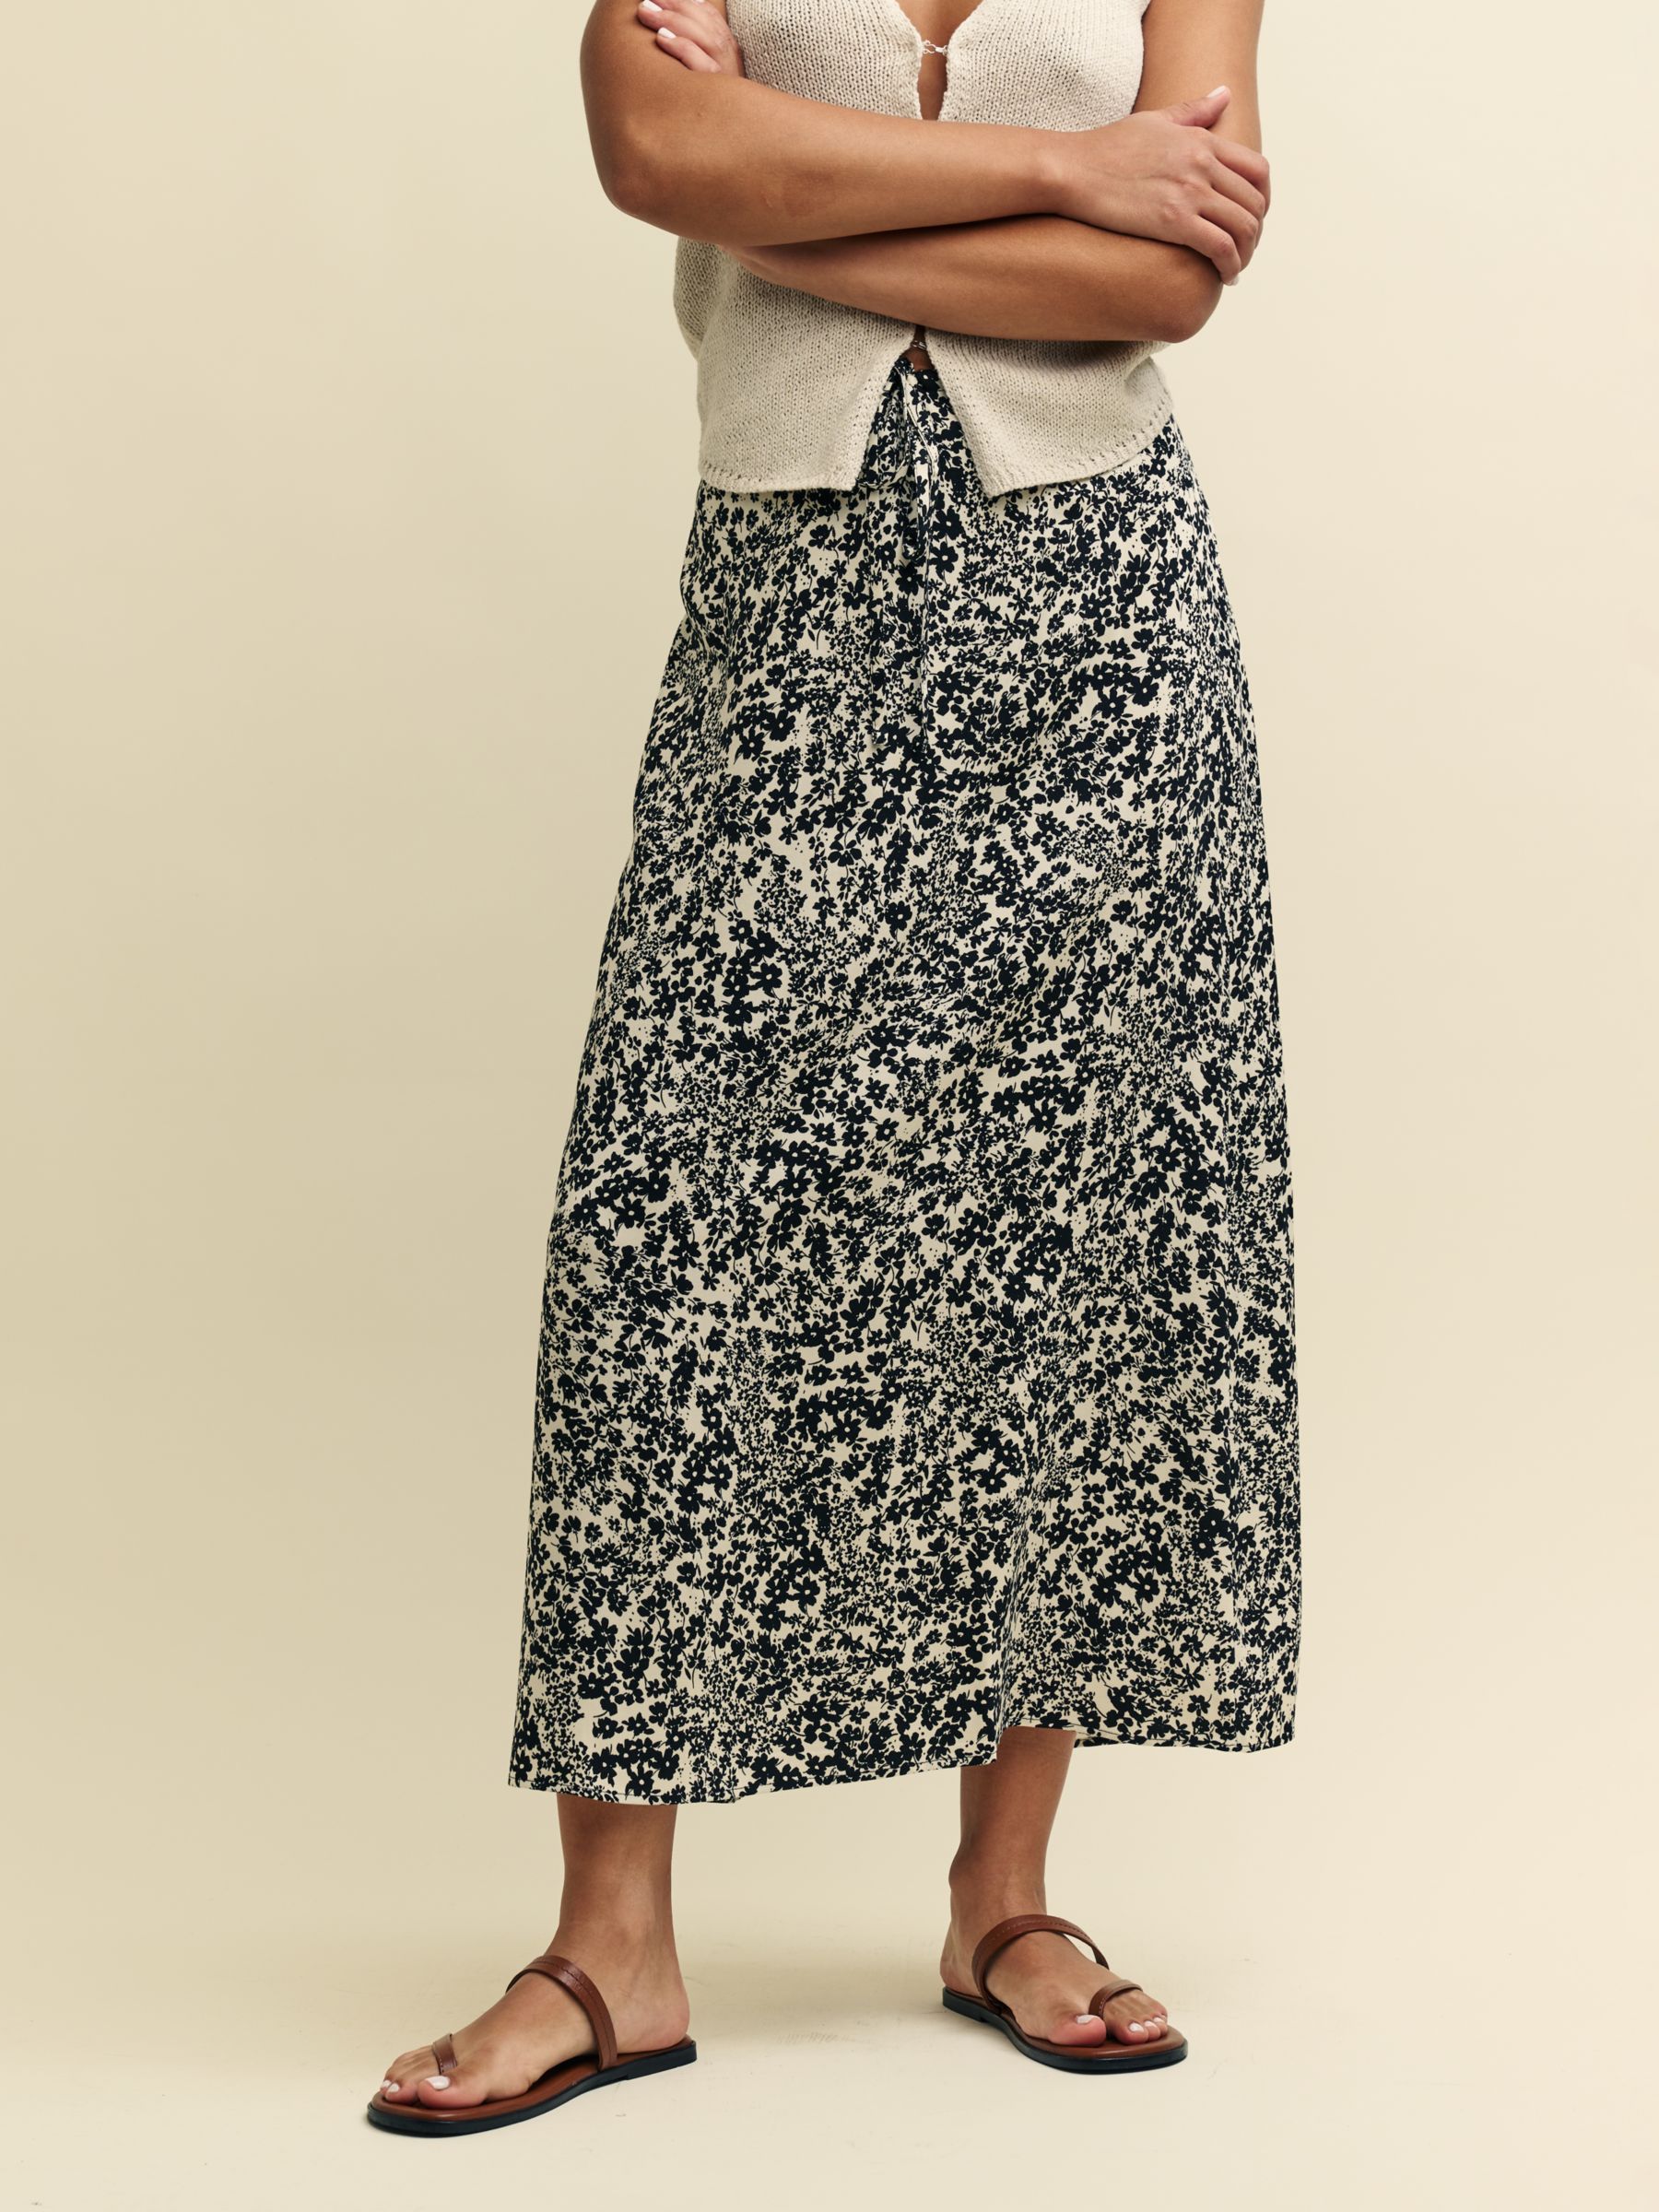 Nobody's Child Monie Leopard Ditsy Print Midaxi Skirt, Black/Multi, 6